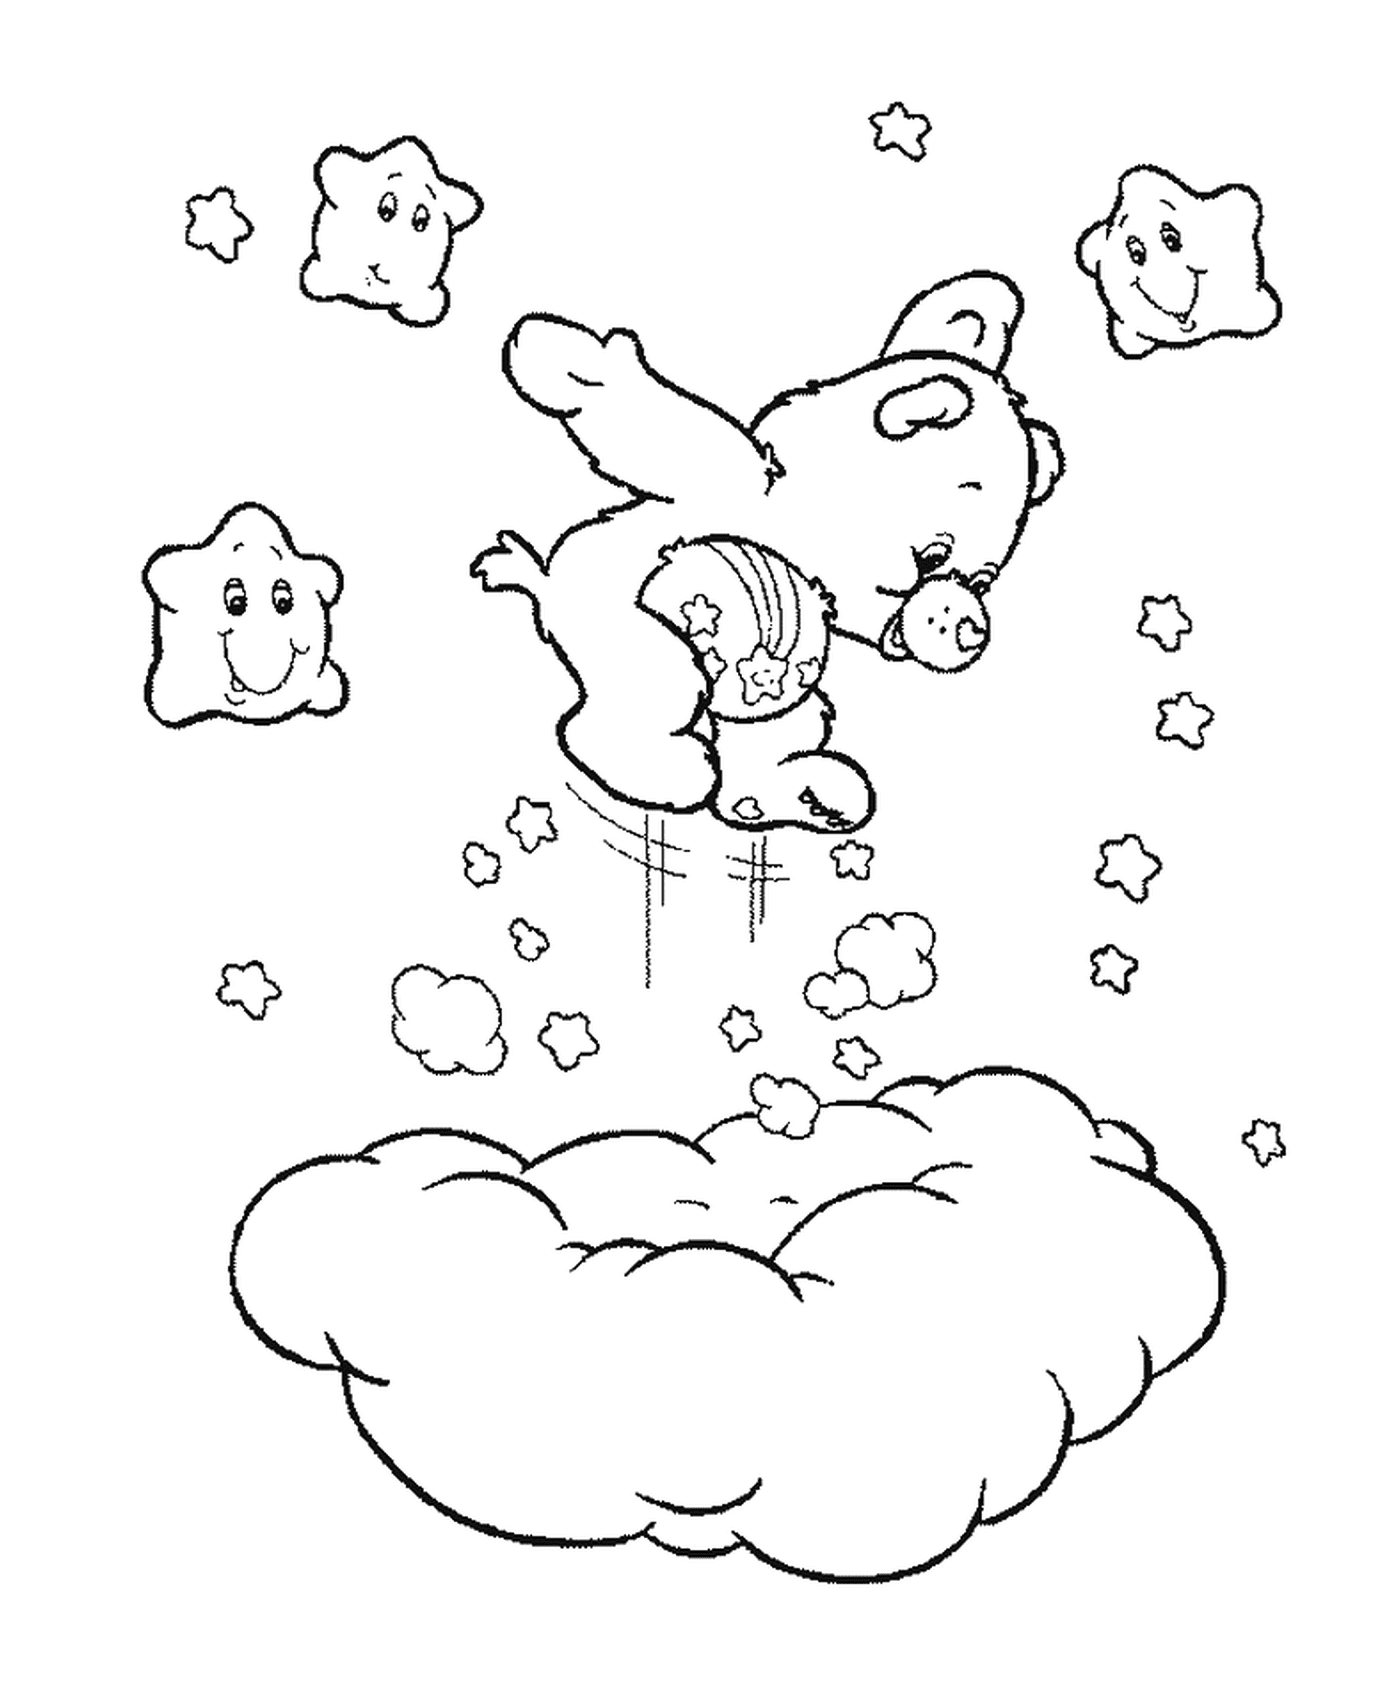  A Bisounour jumps over a cloud 